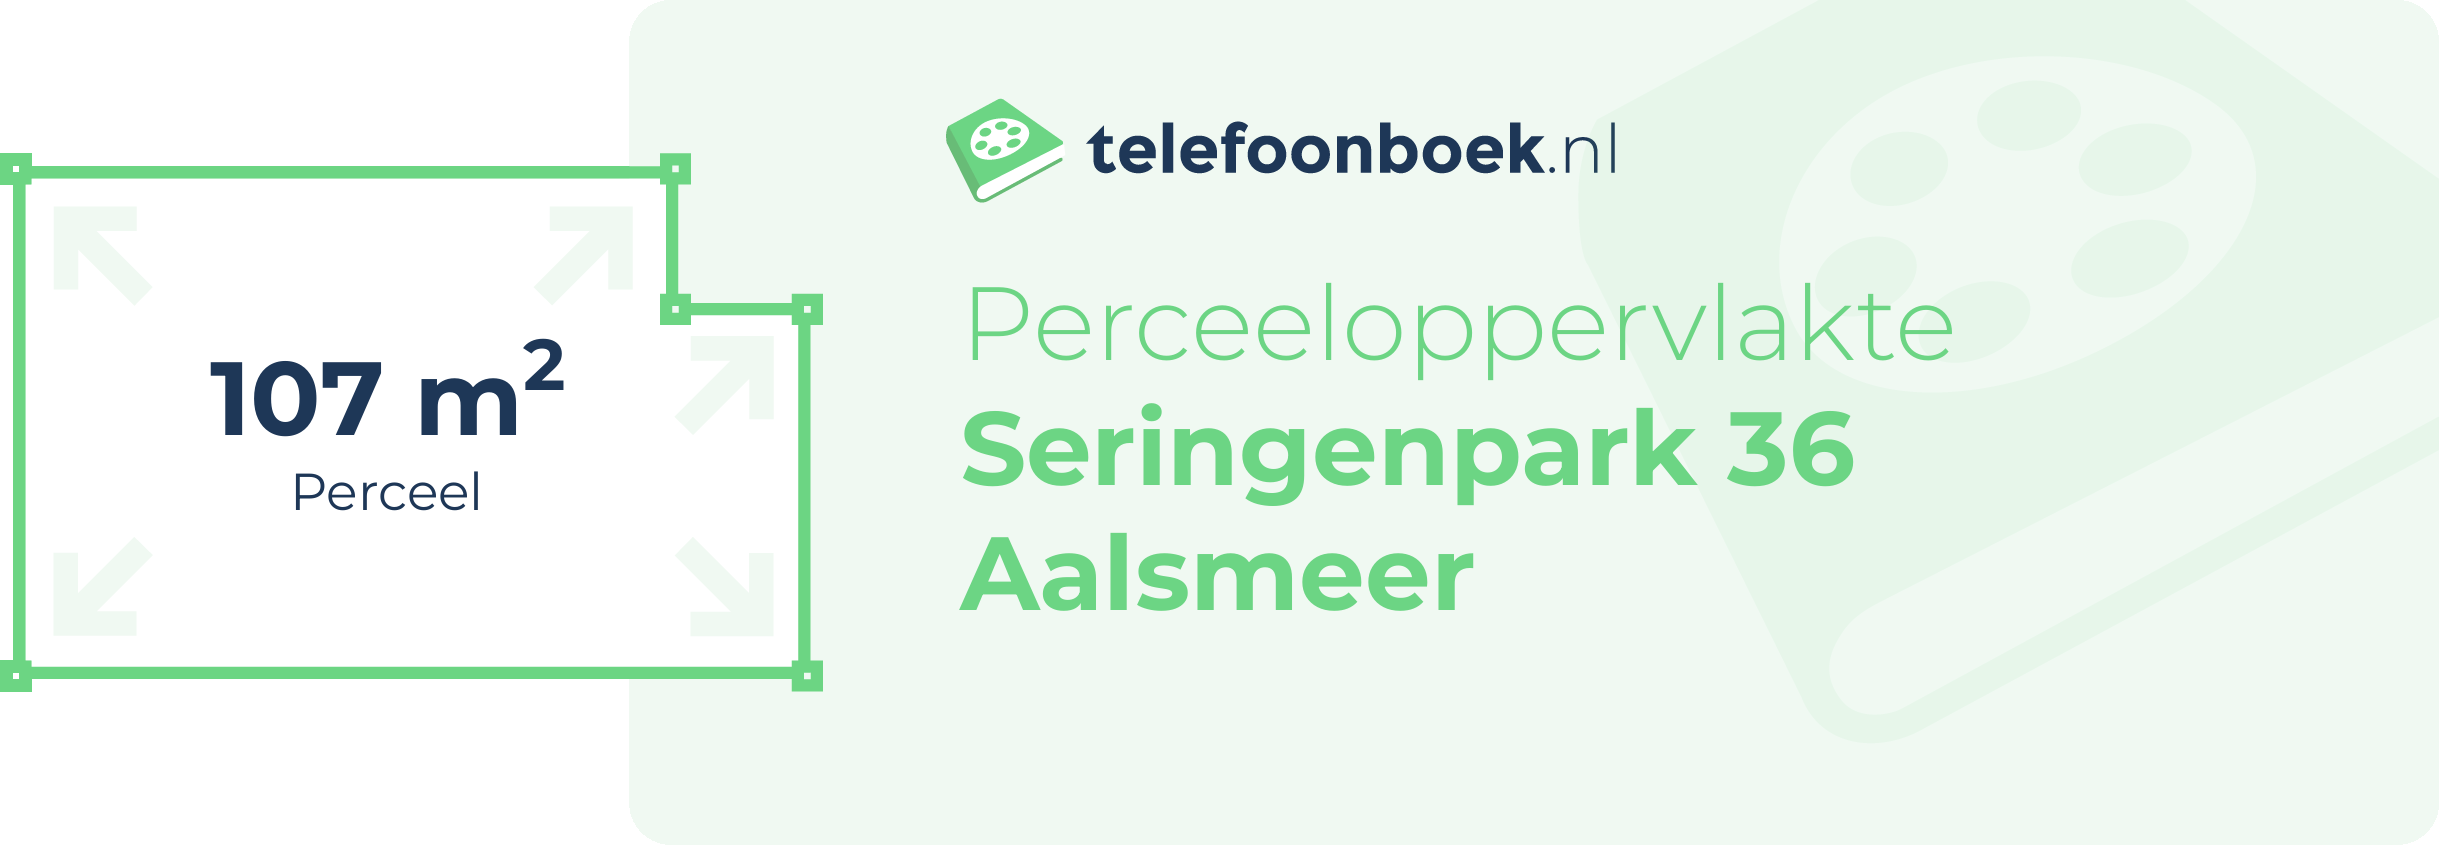 Perceeloppervlakte Seringenpark 36 Aalsmeer